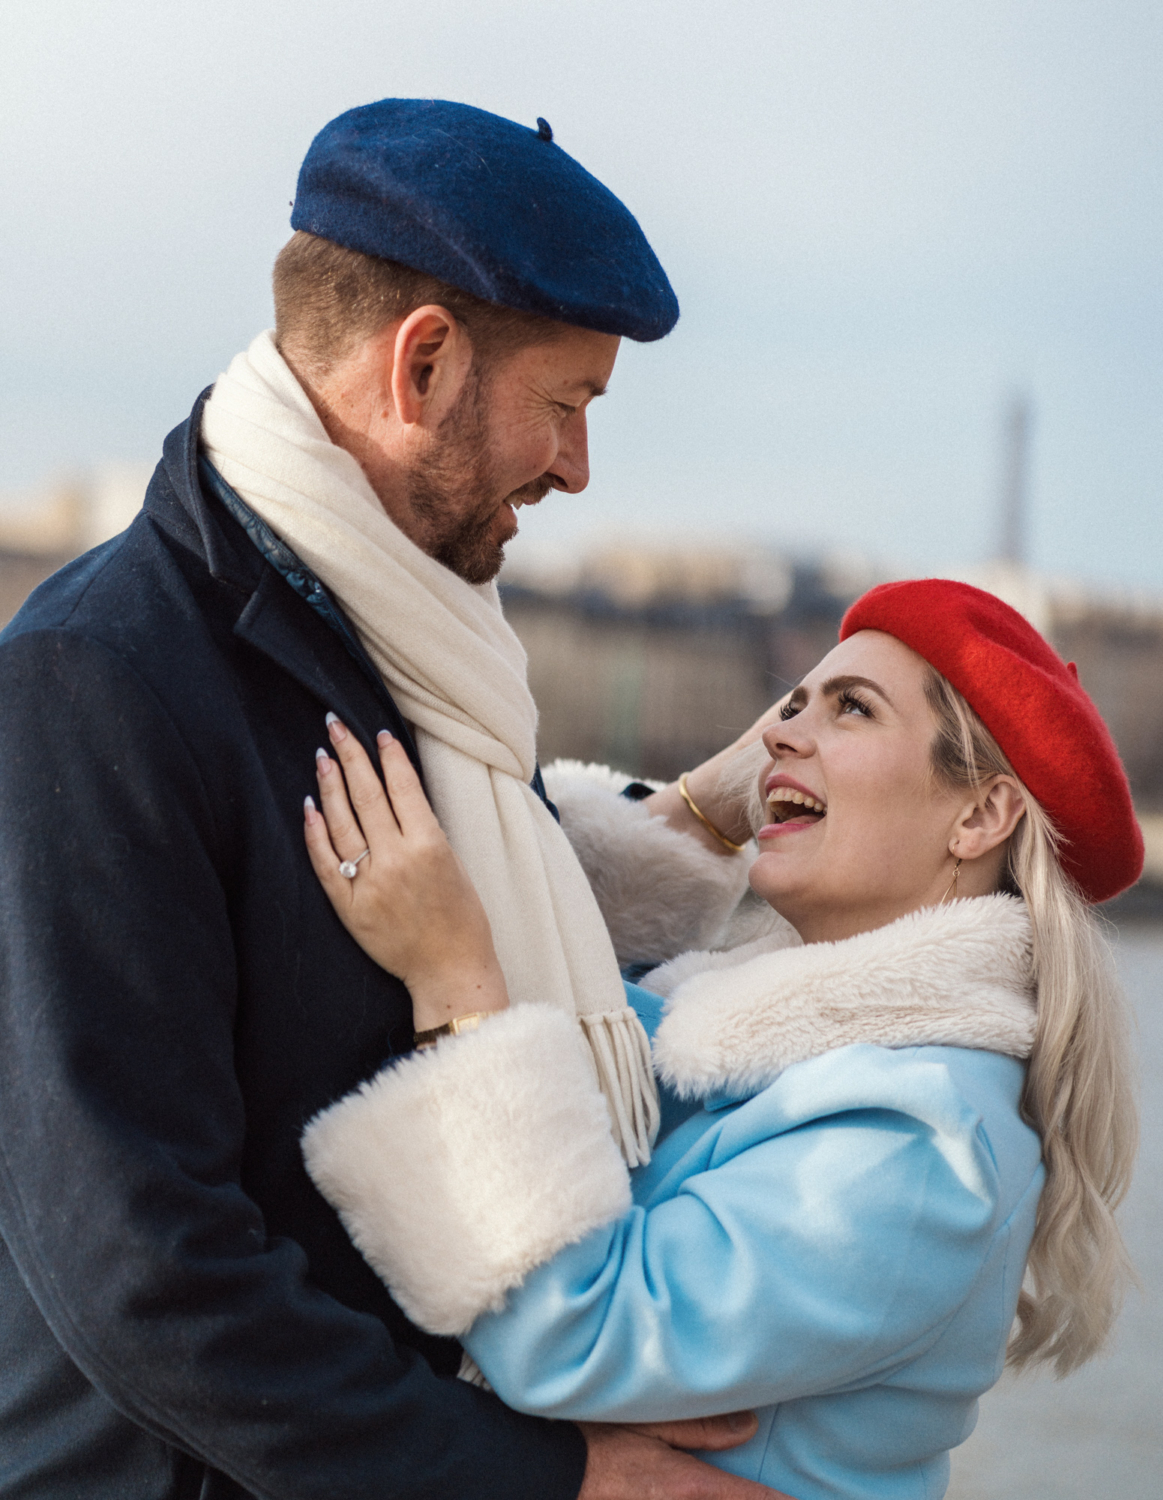 woman and man in berets laugh in paris